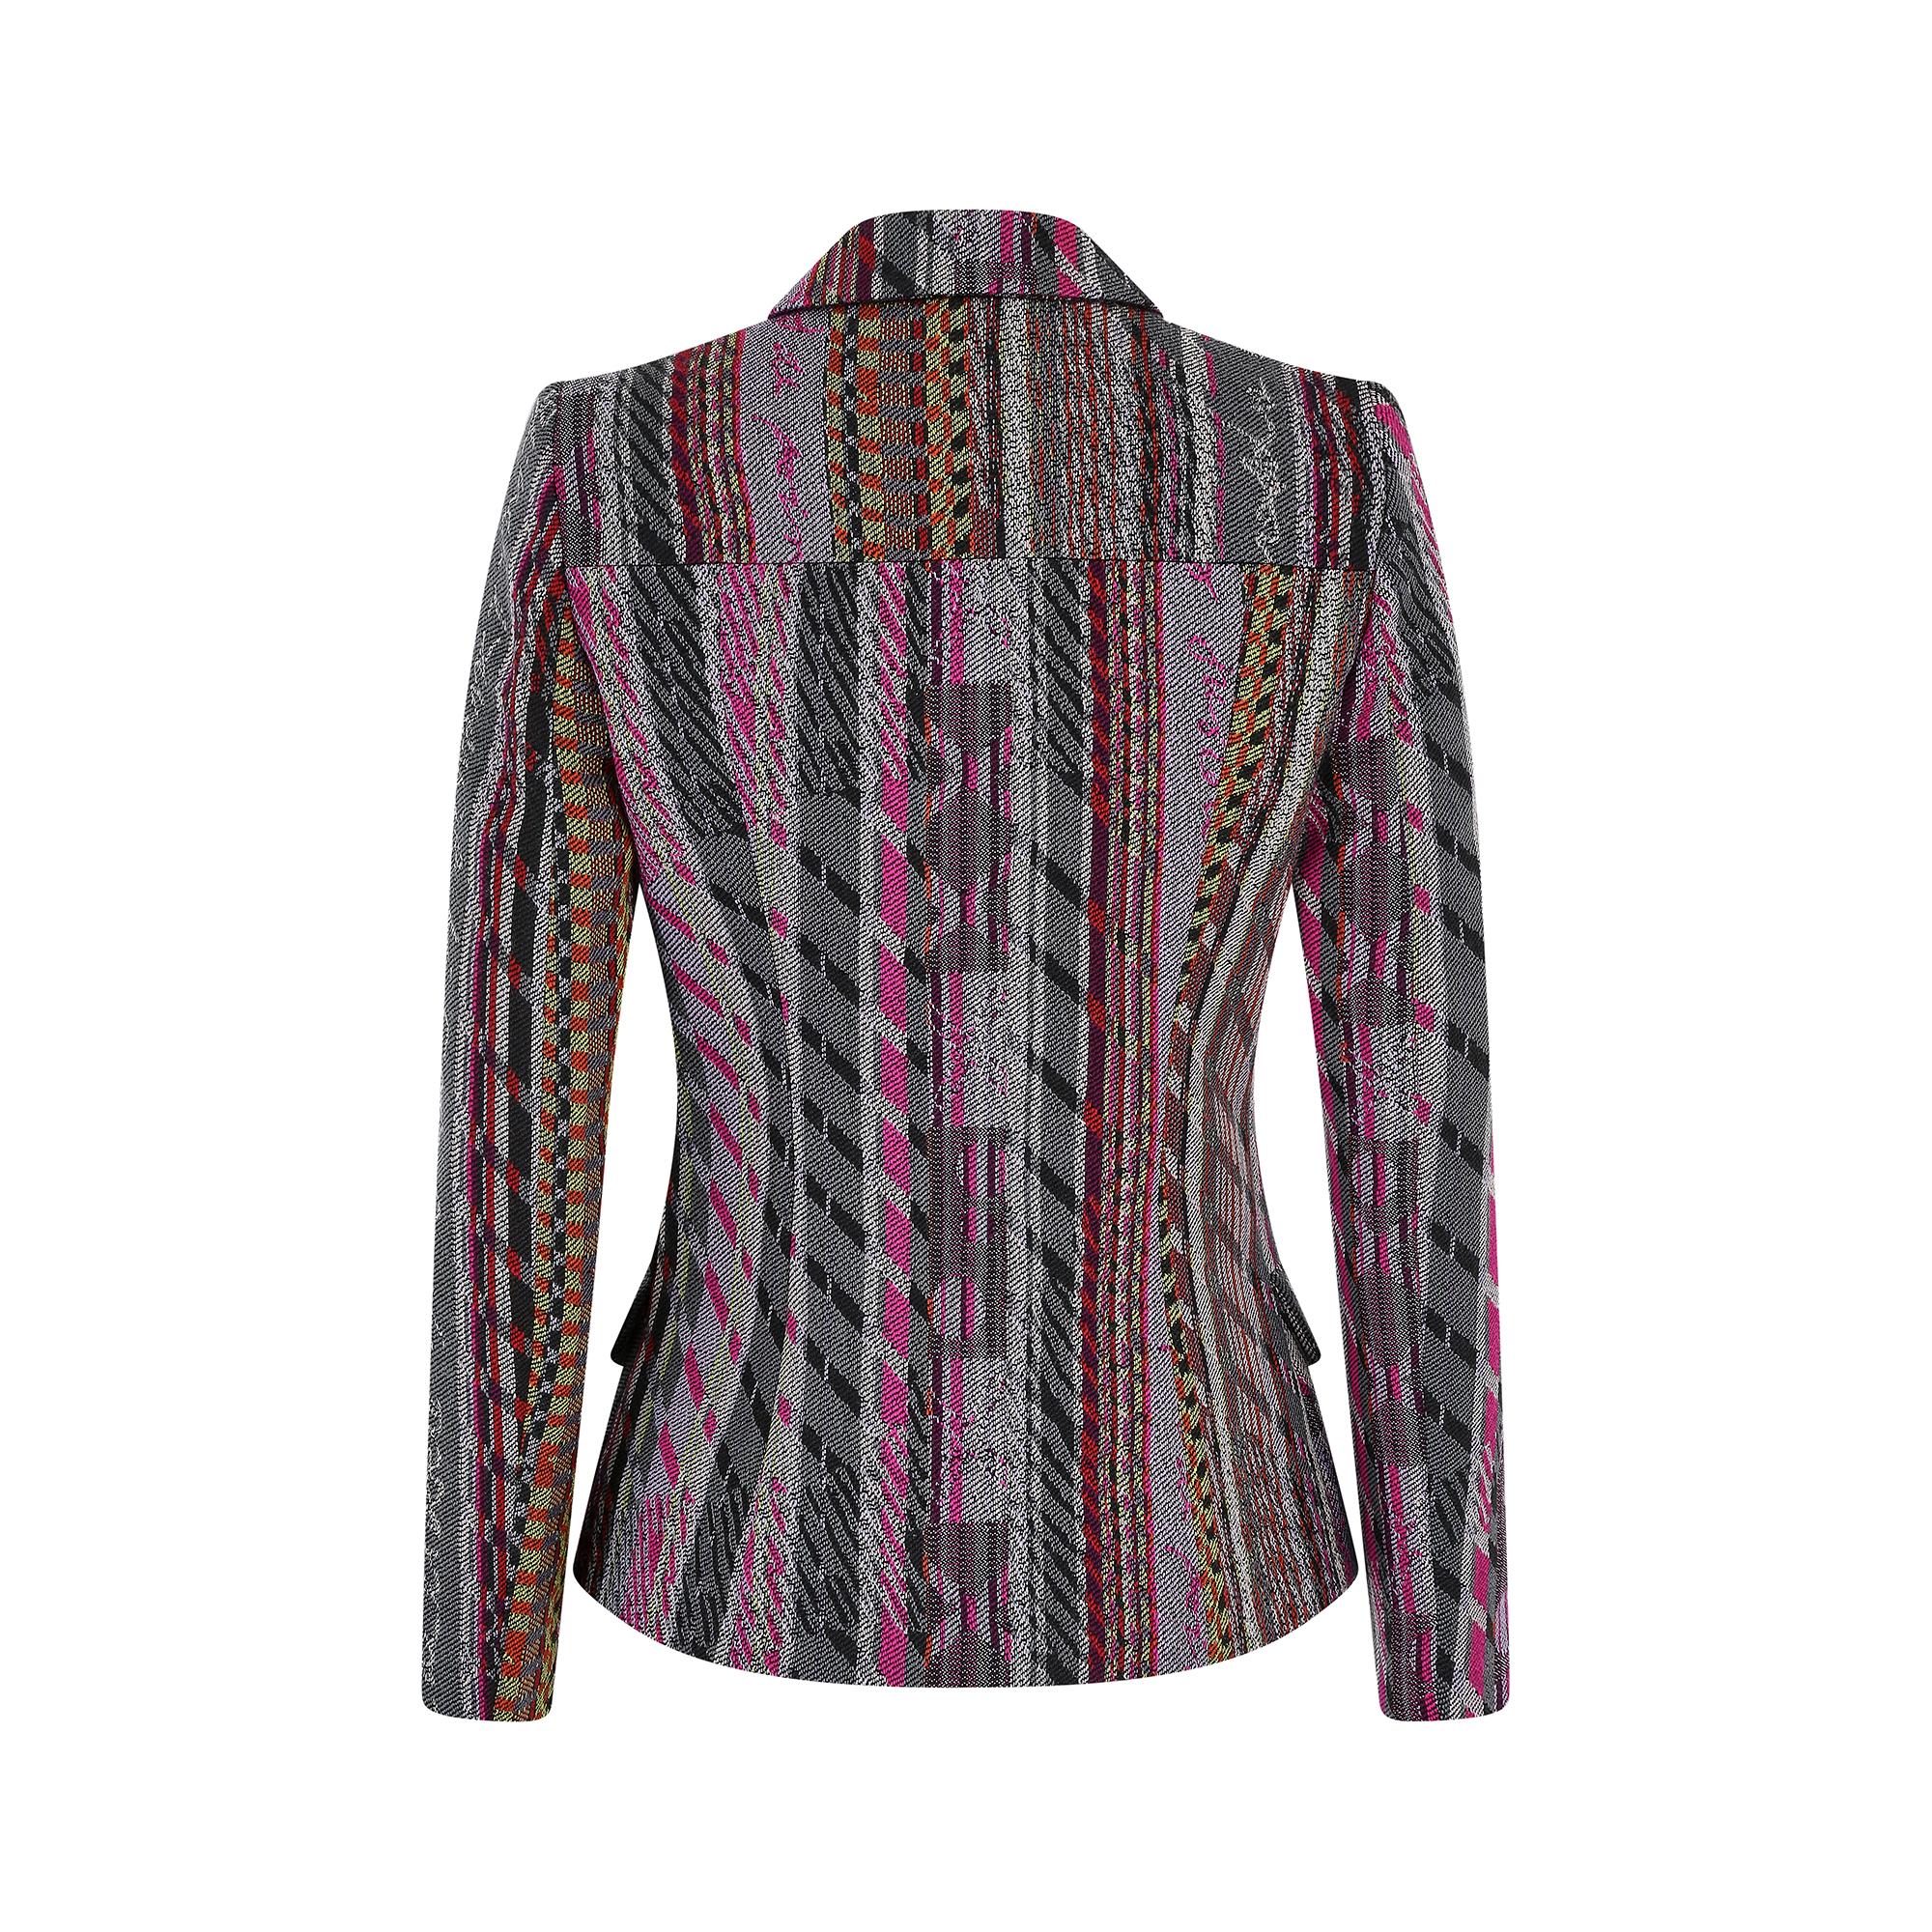 Women's 1990s Christian Lacroix Bazar Colourful Wool Jacket For Sale